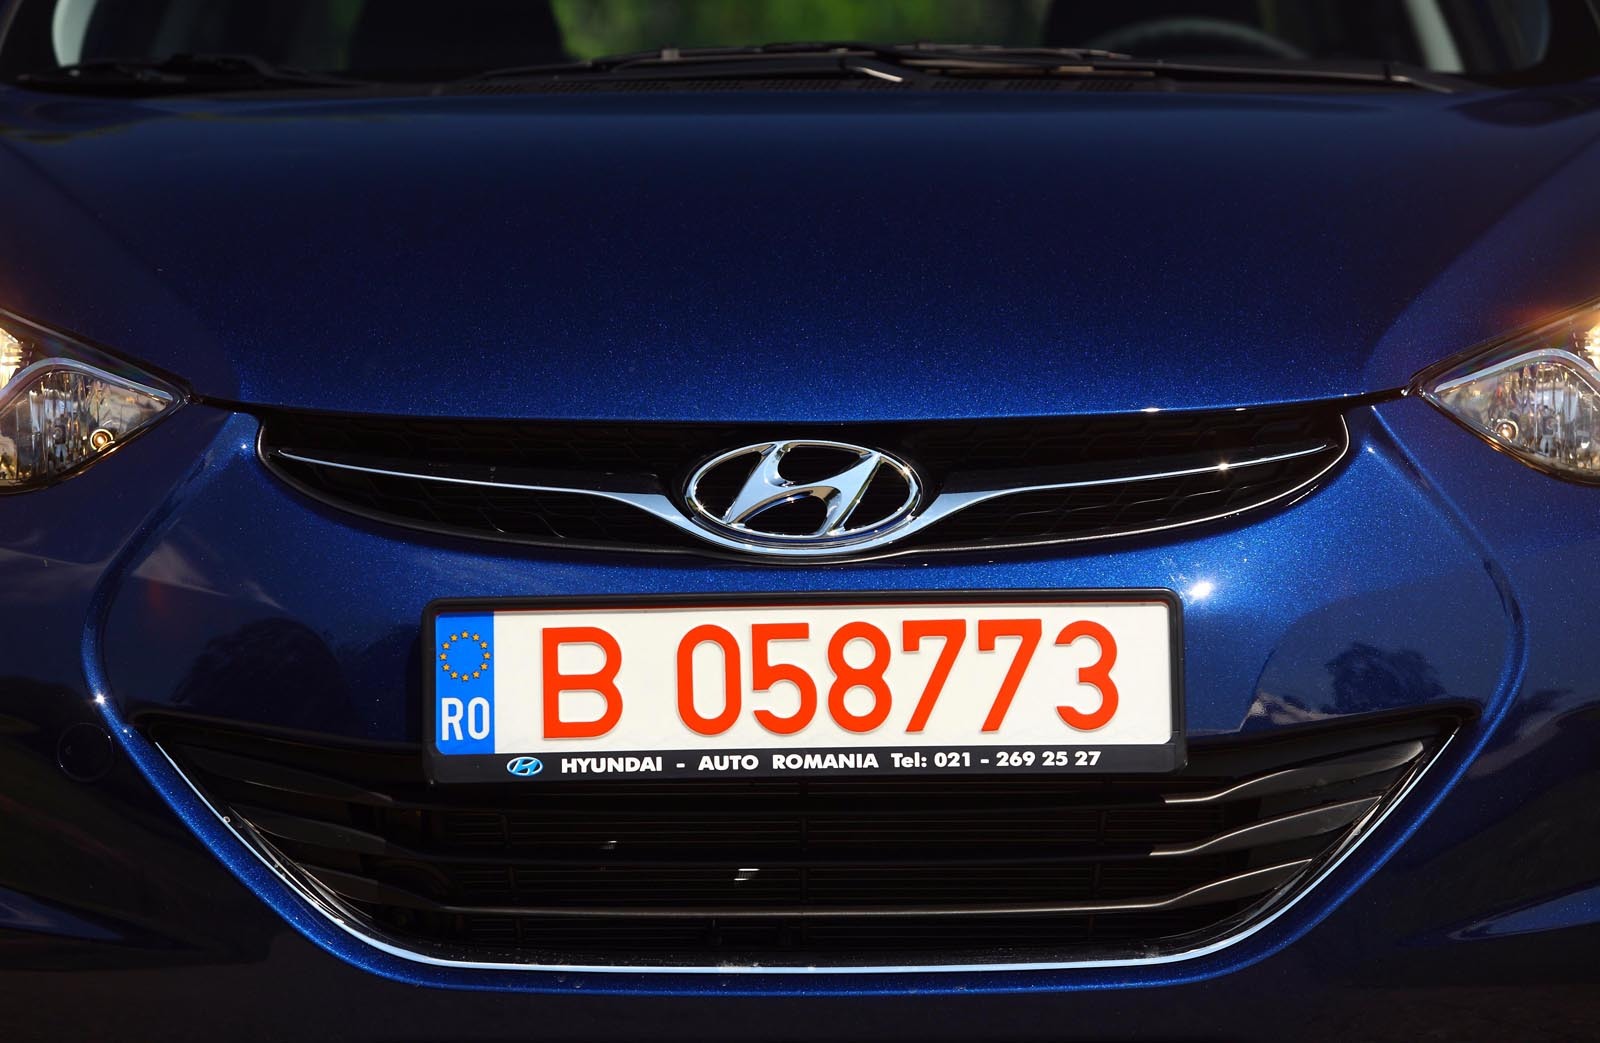 Hyundai Elantra arboreaza o imagine de marca interesanta: clepsidra